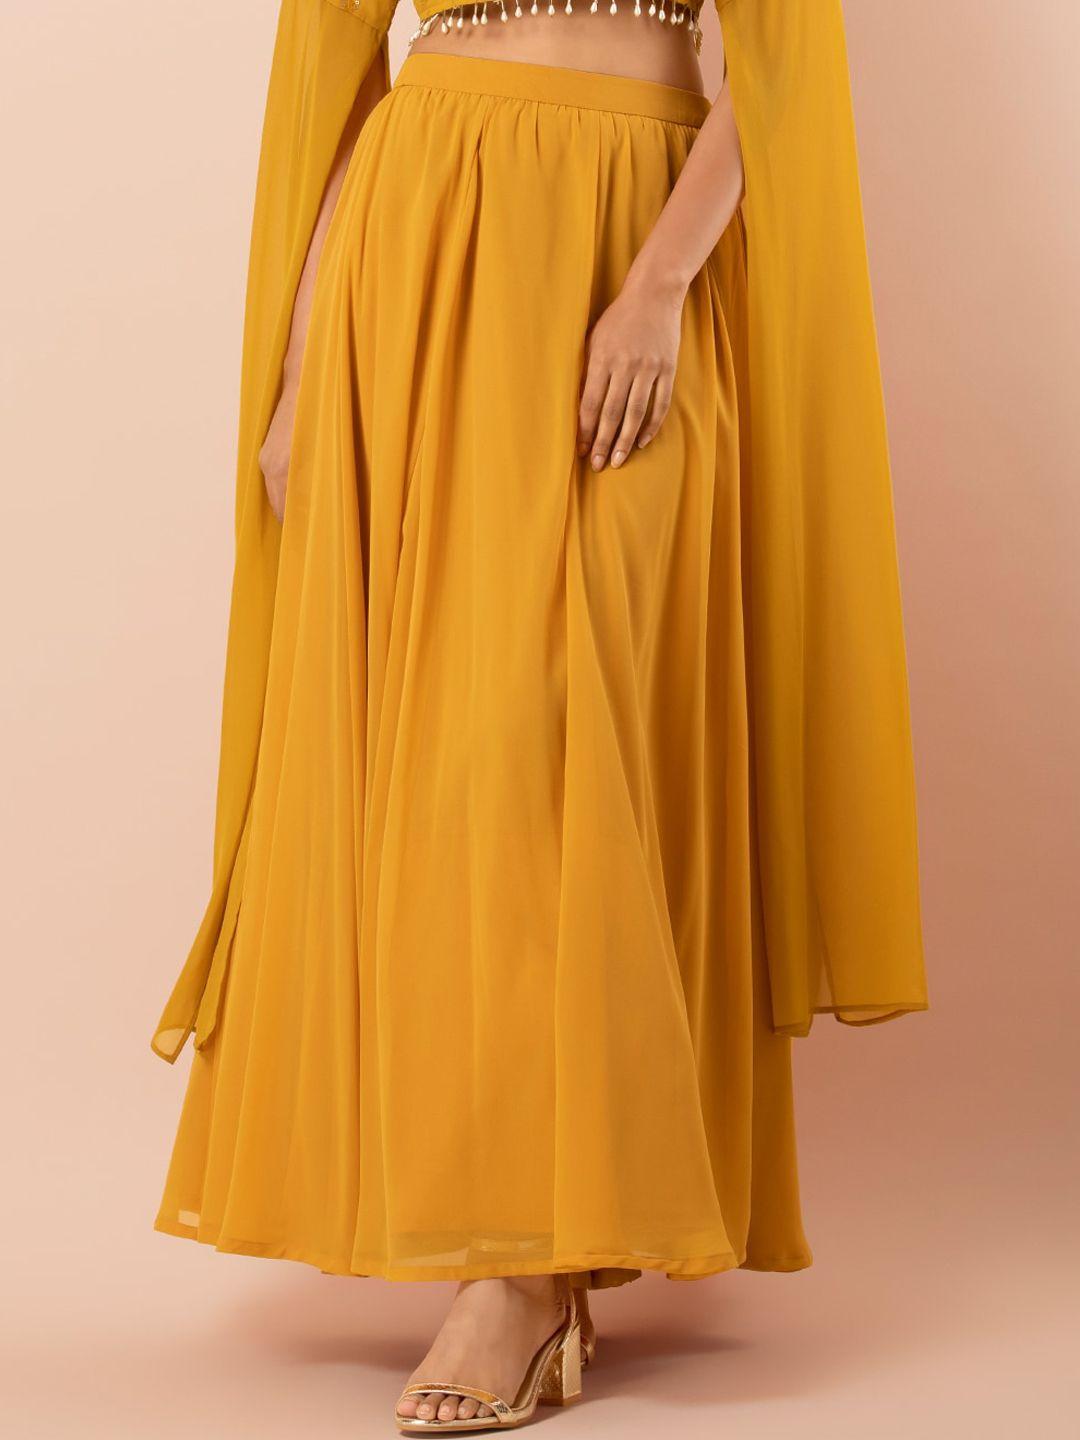 indya mustard yellow flared maxi skirt